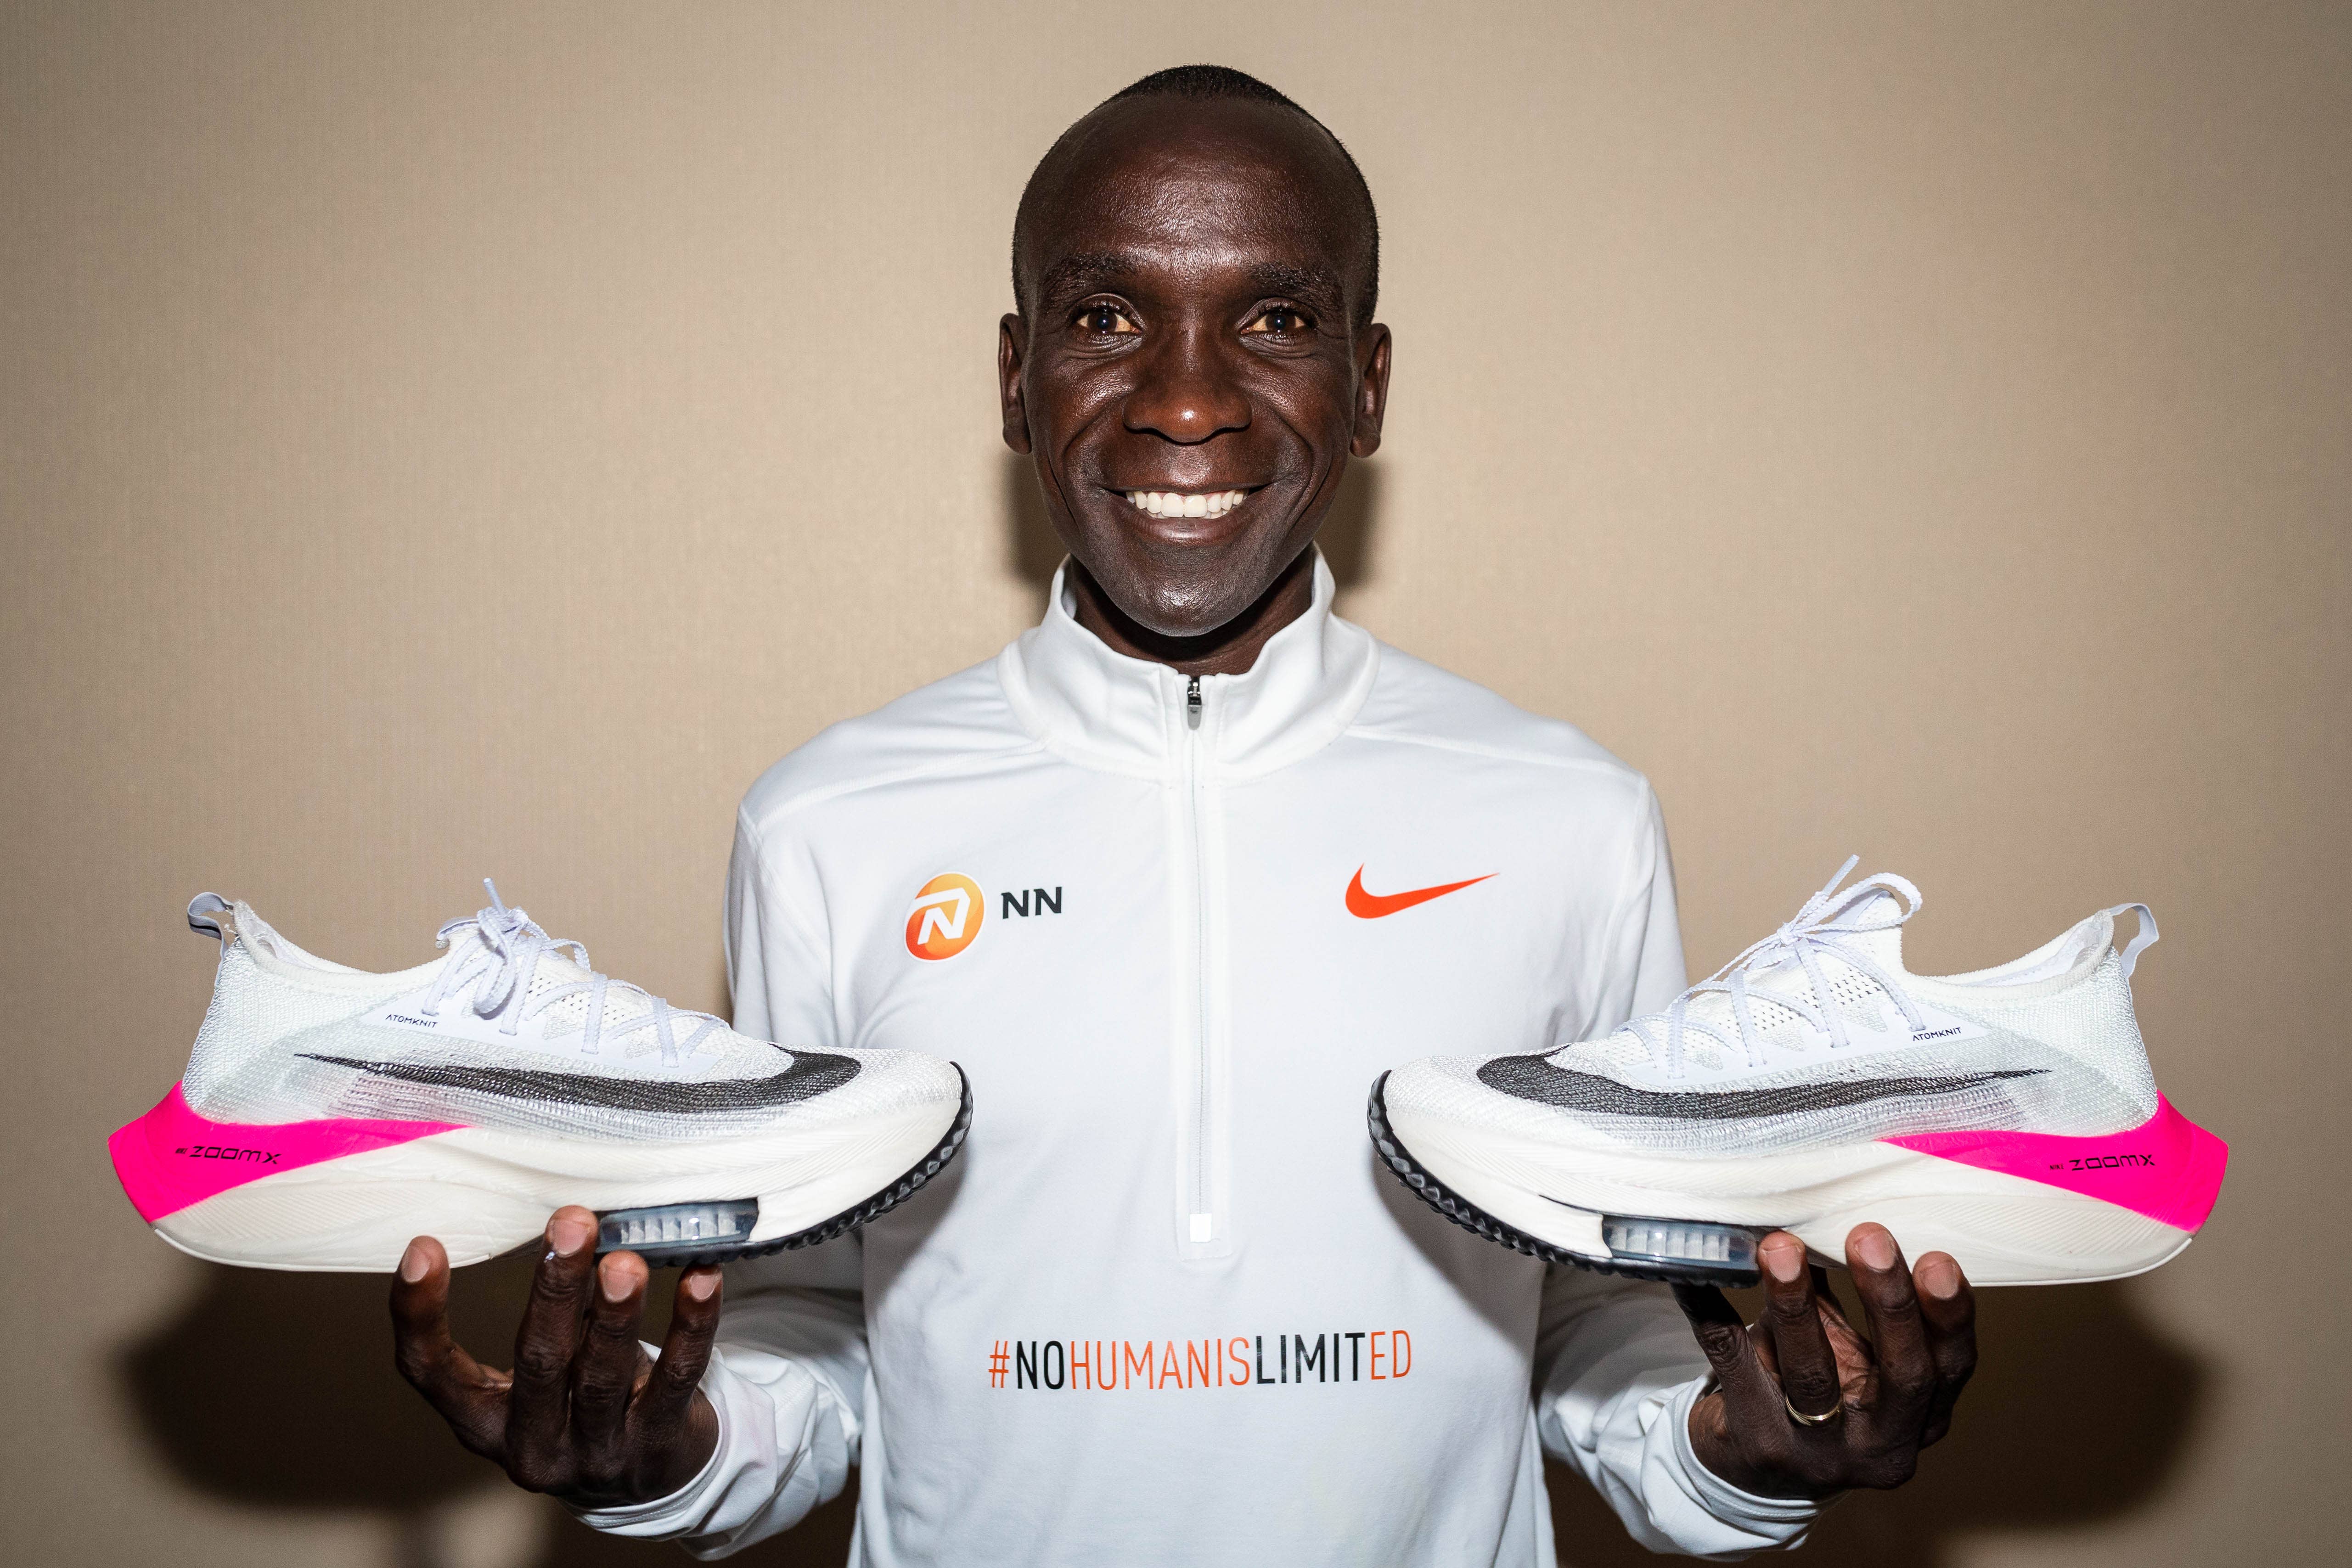 Eliud Kipchoge 1:59 Attempt Kit Nike Next% Marathon Shoe